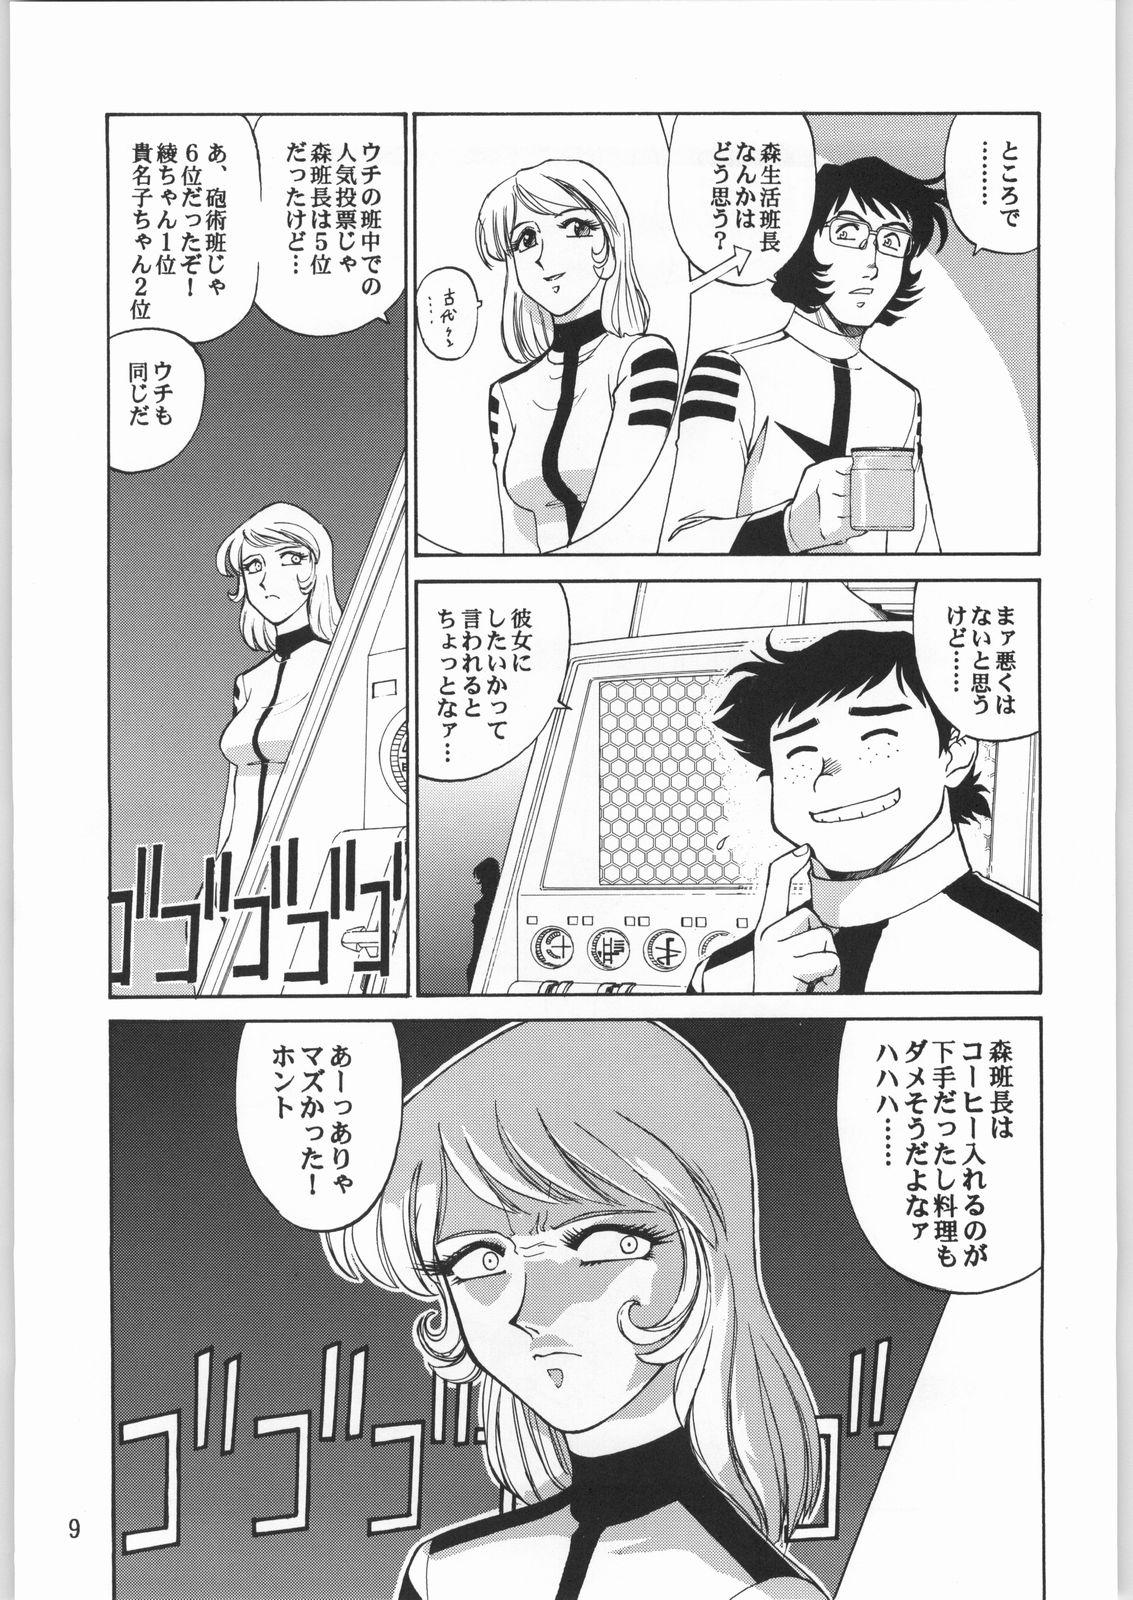 Safadinha Megaton Punch 1 - Space battleship yamato Chobits Pareja - Page 8